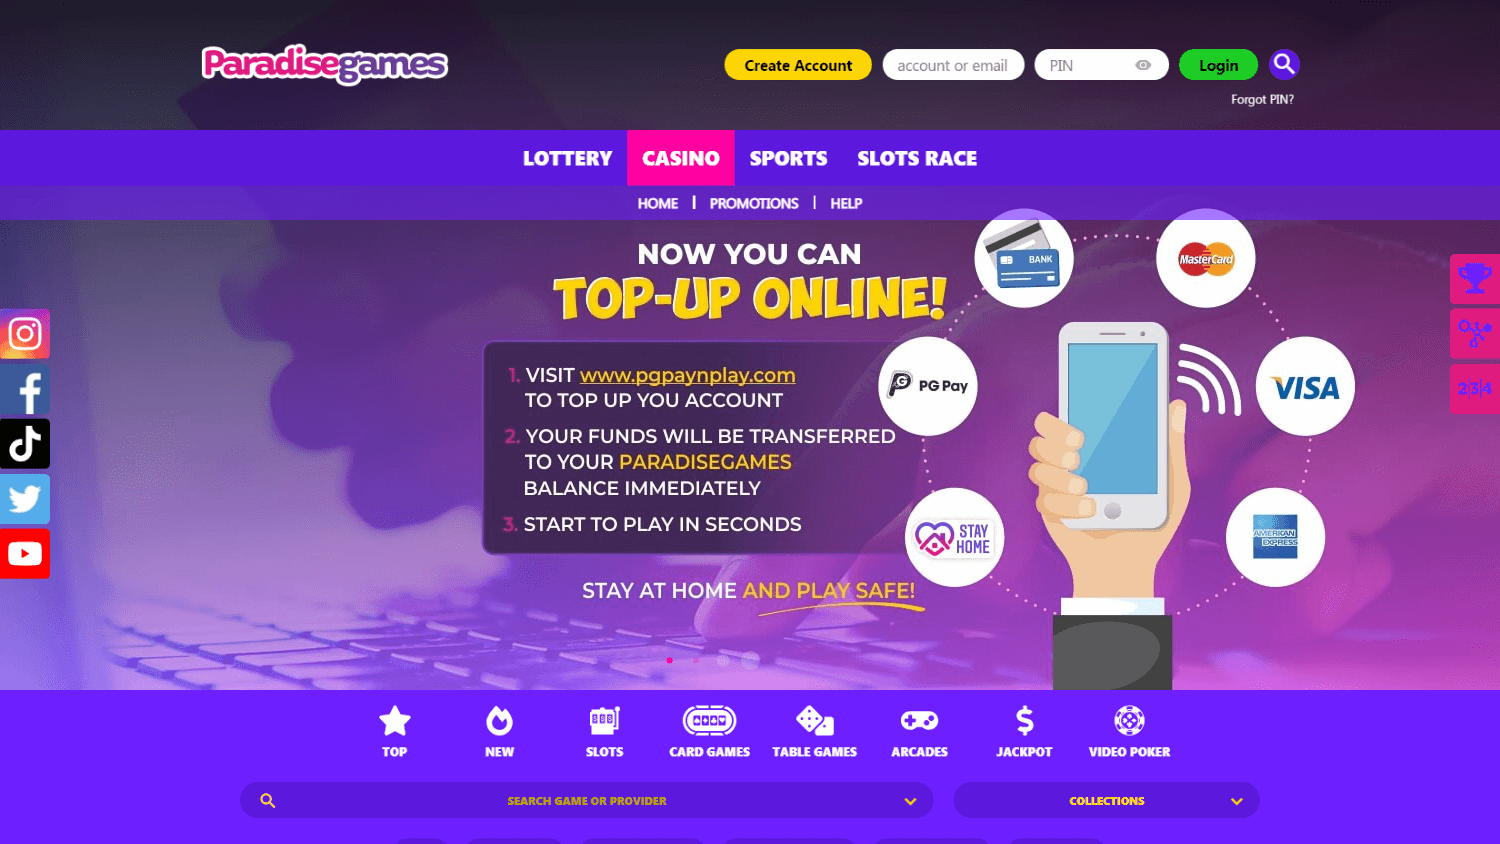 paradisegames_casino_homepage_desktop